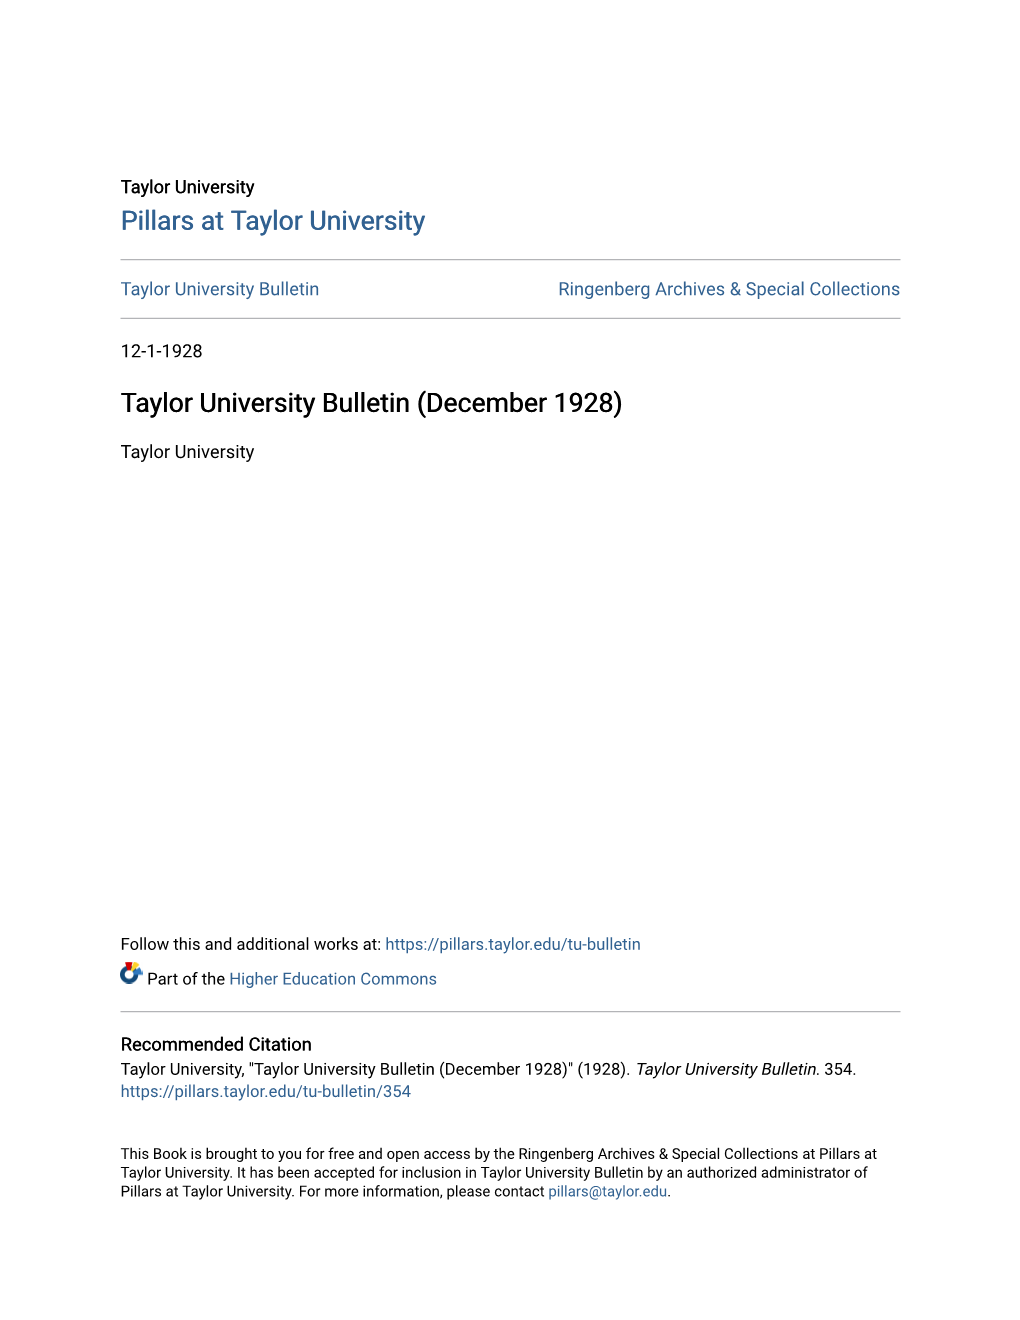 Taylor University Bulletin (December 1928)